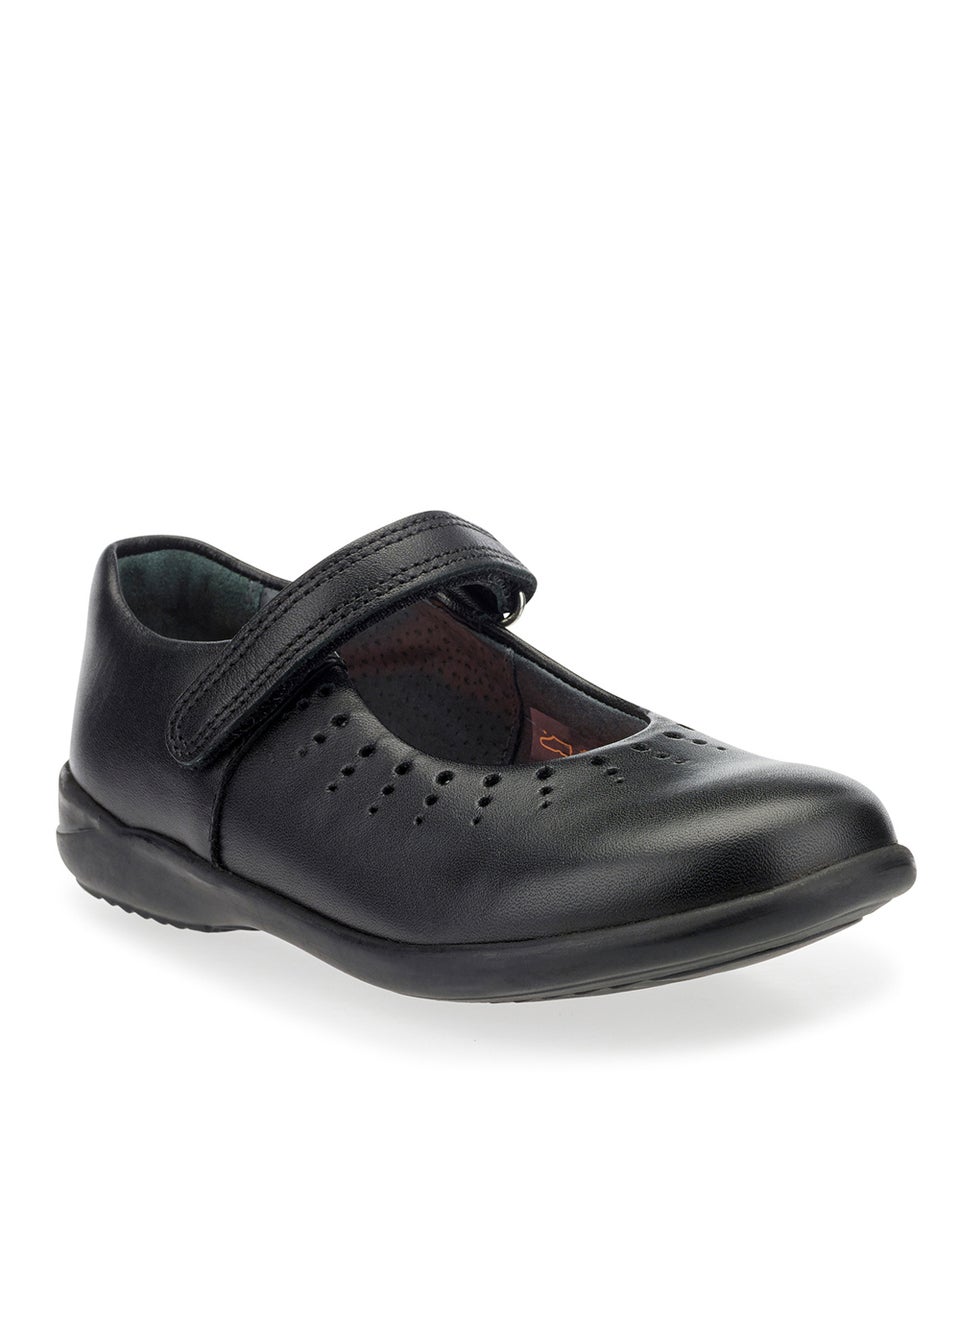 Start-Rite Mary Jane Black Leather Riptape School Shoes